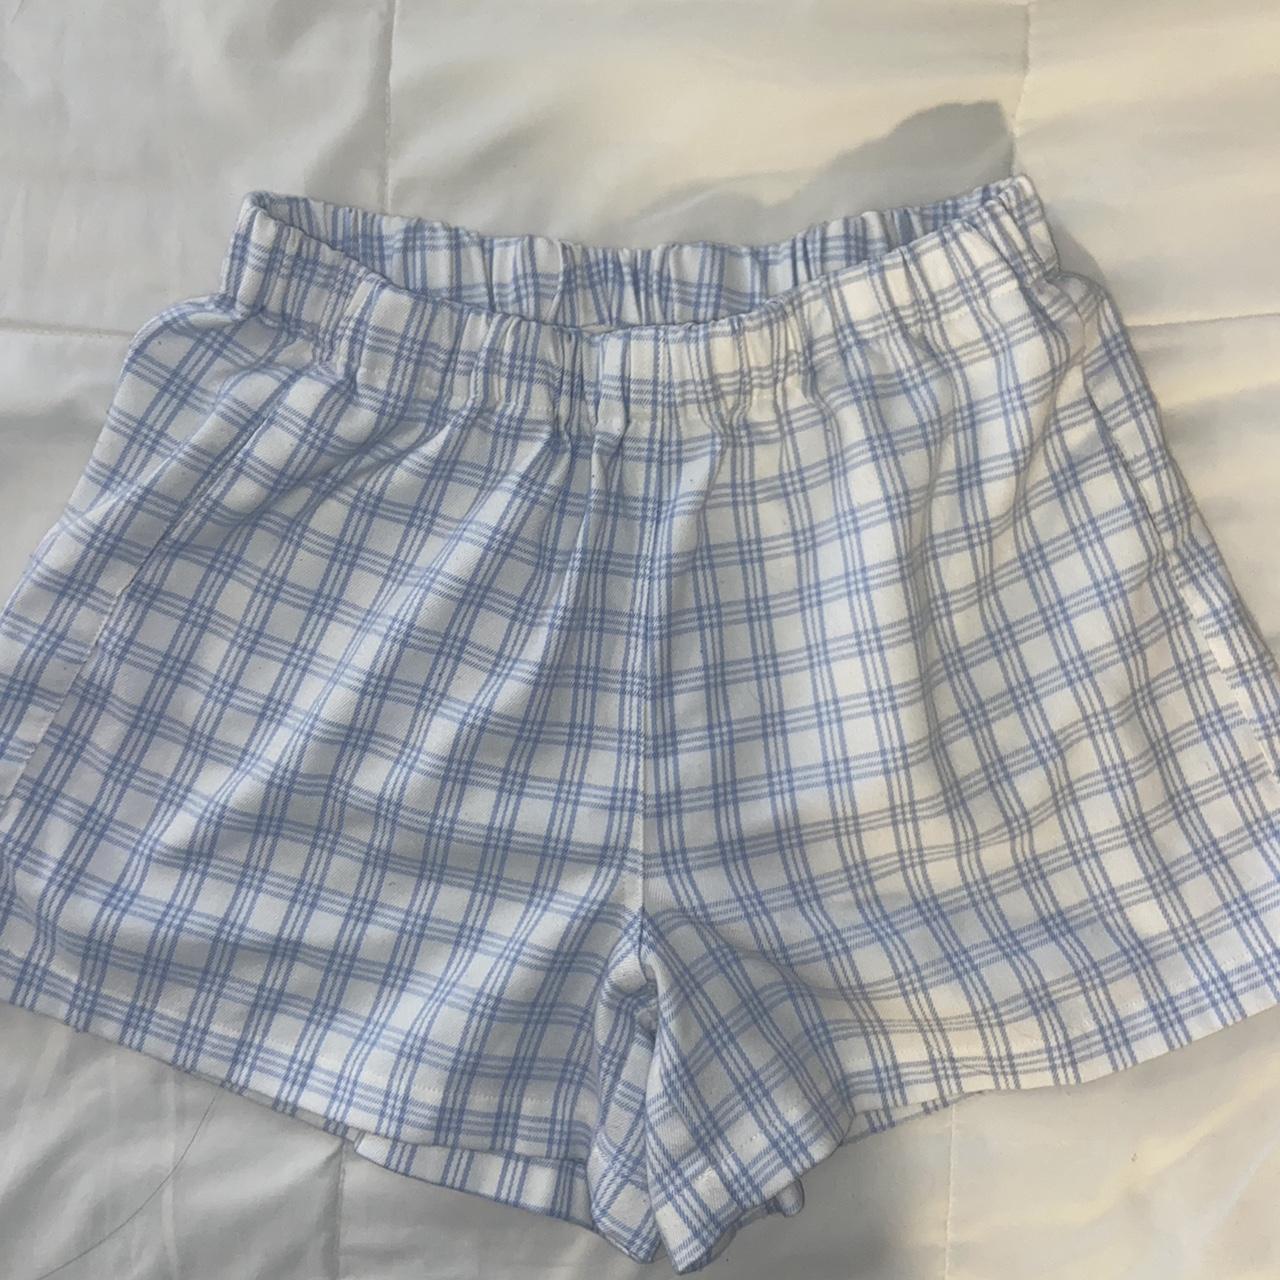 Brandy Melville boxer shorts (One size) - Depop